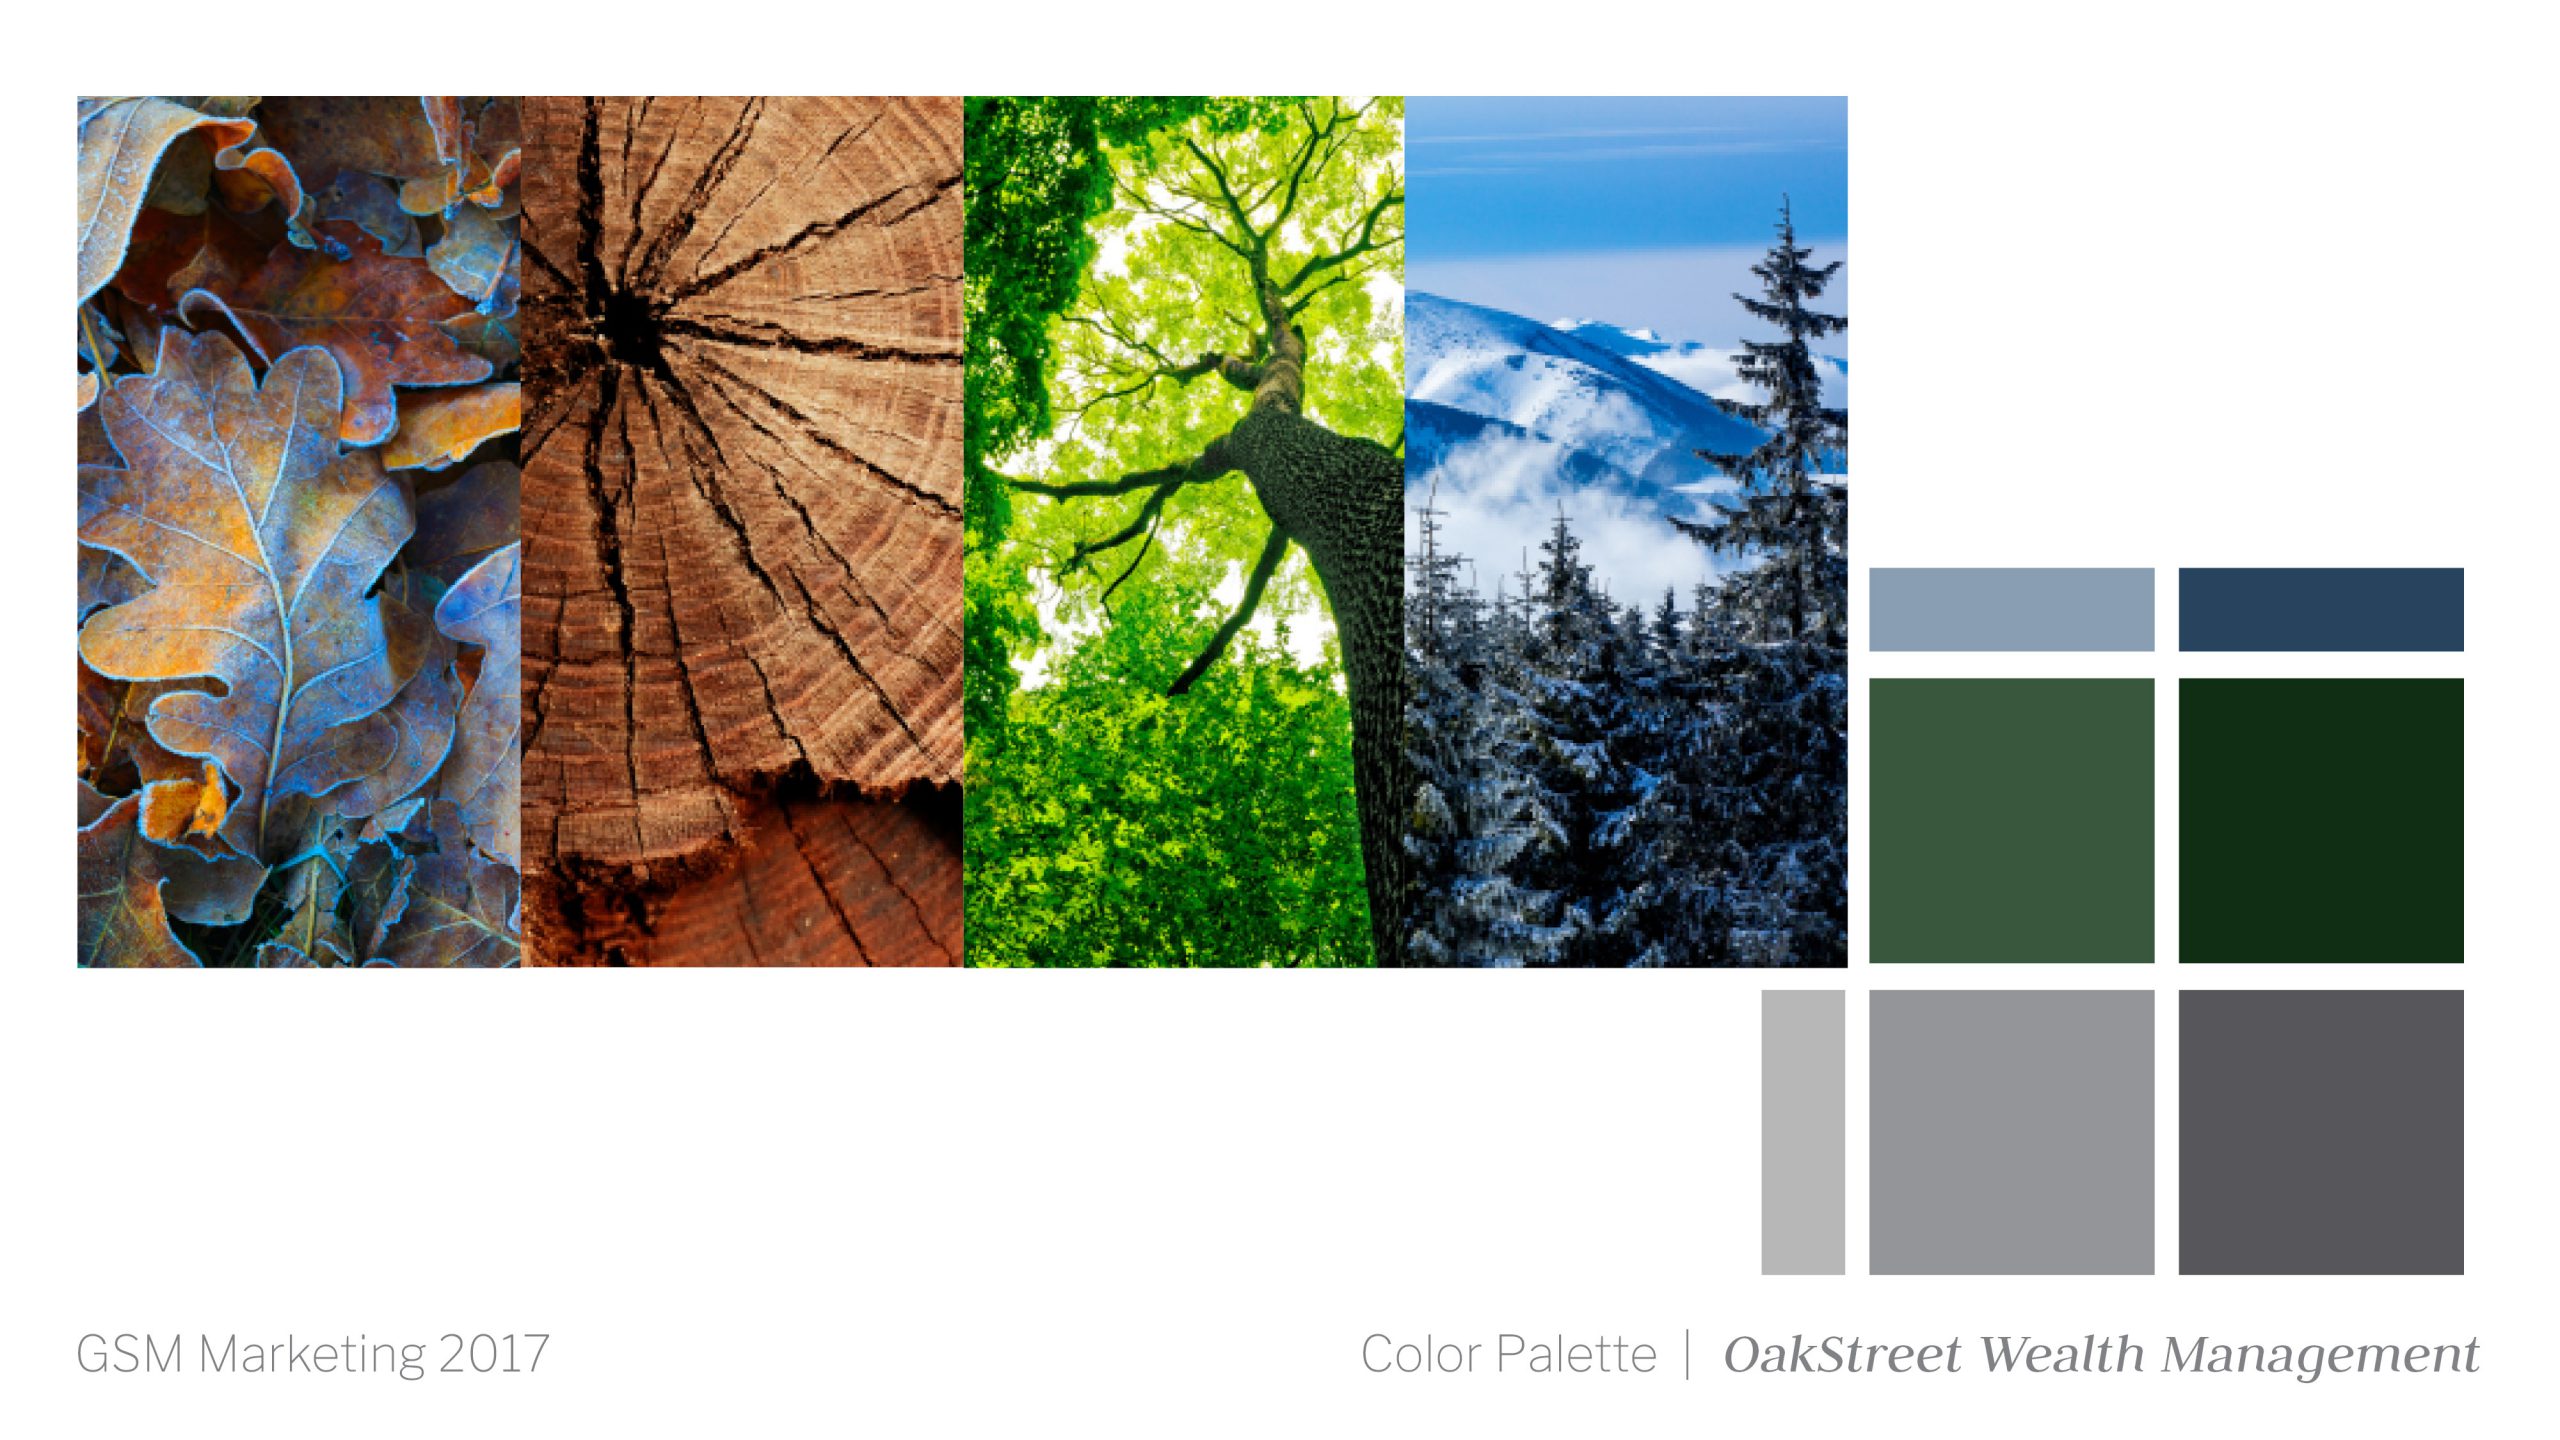 Oakstreet color palette plan